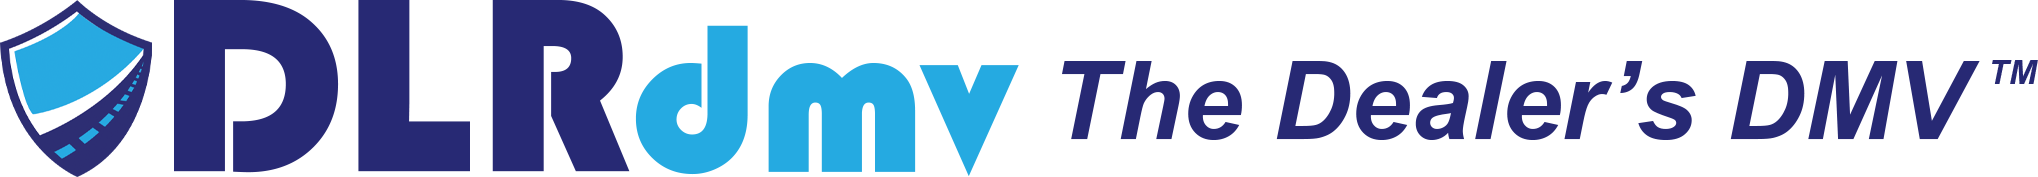 DLRdmv logo